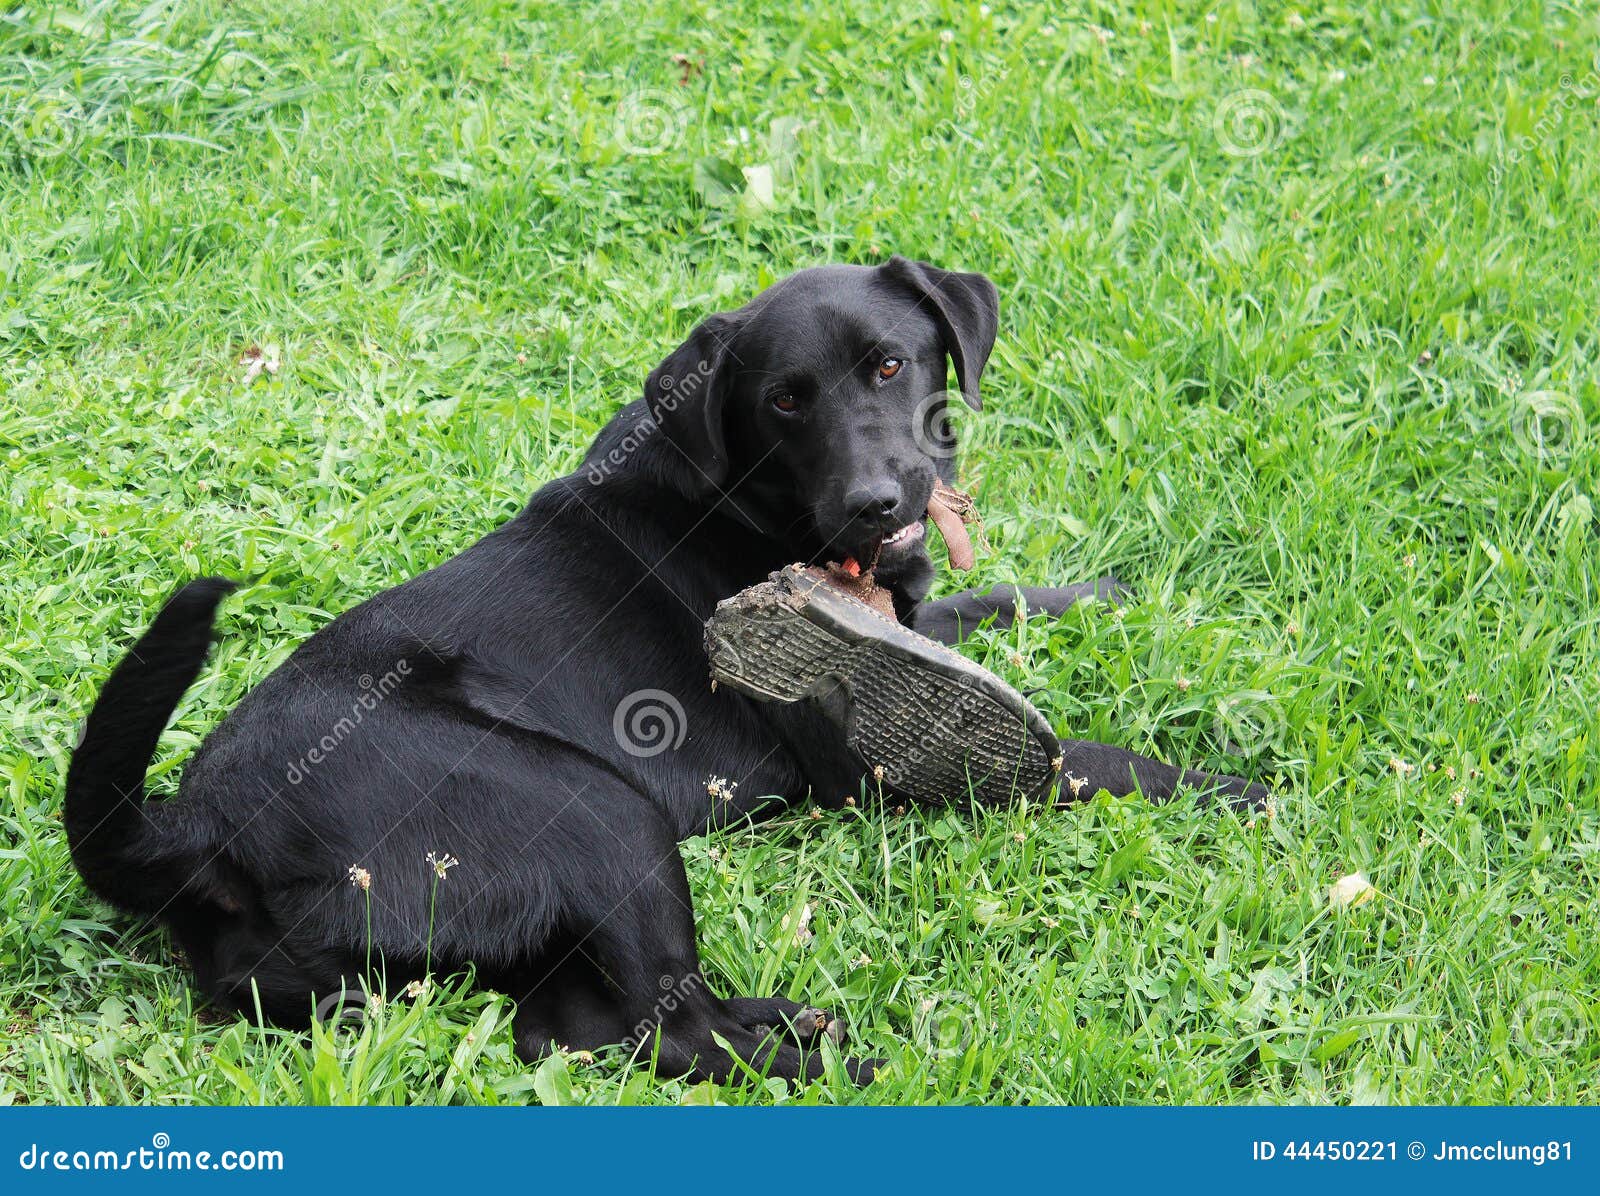 Dog Chewing Shoe Stock Photo Image 44450221